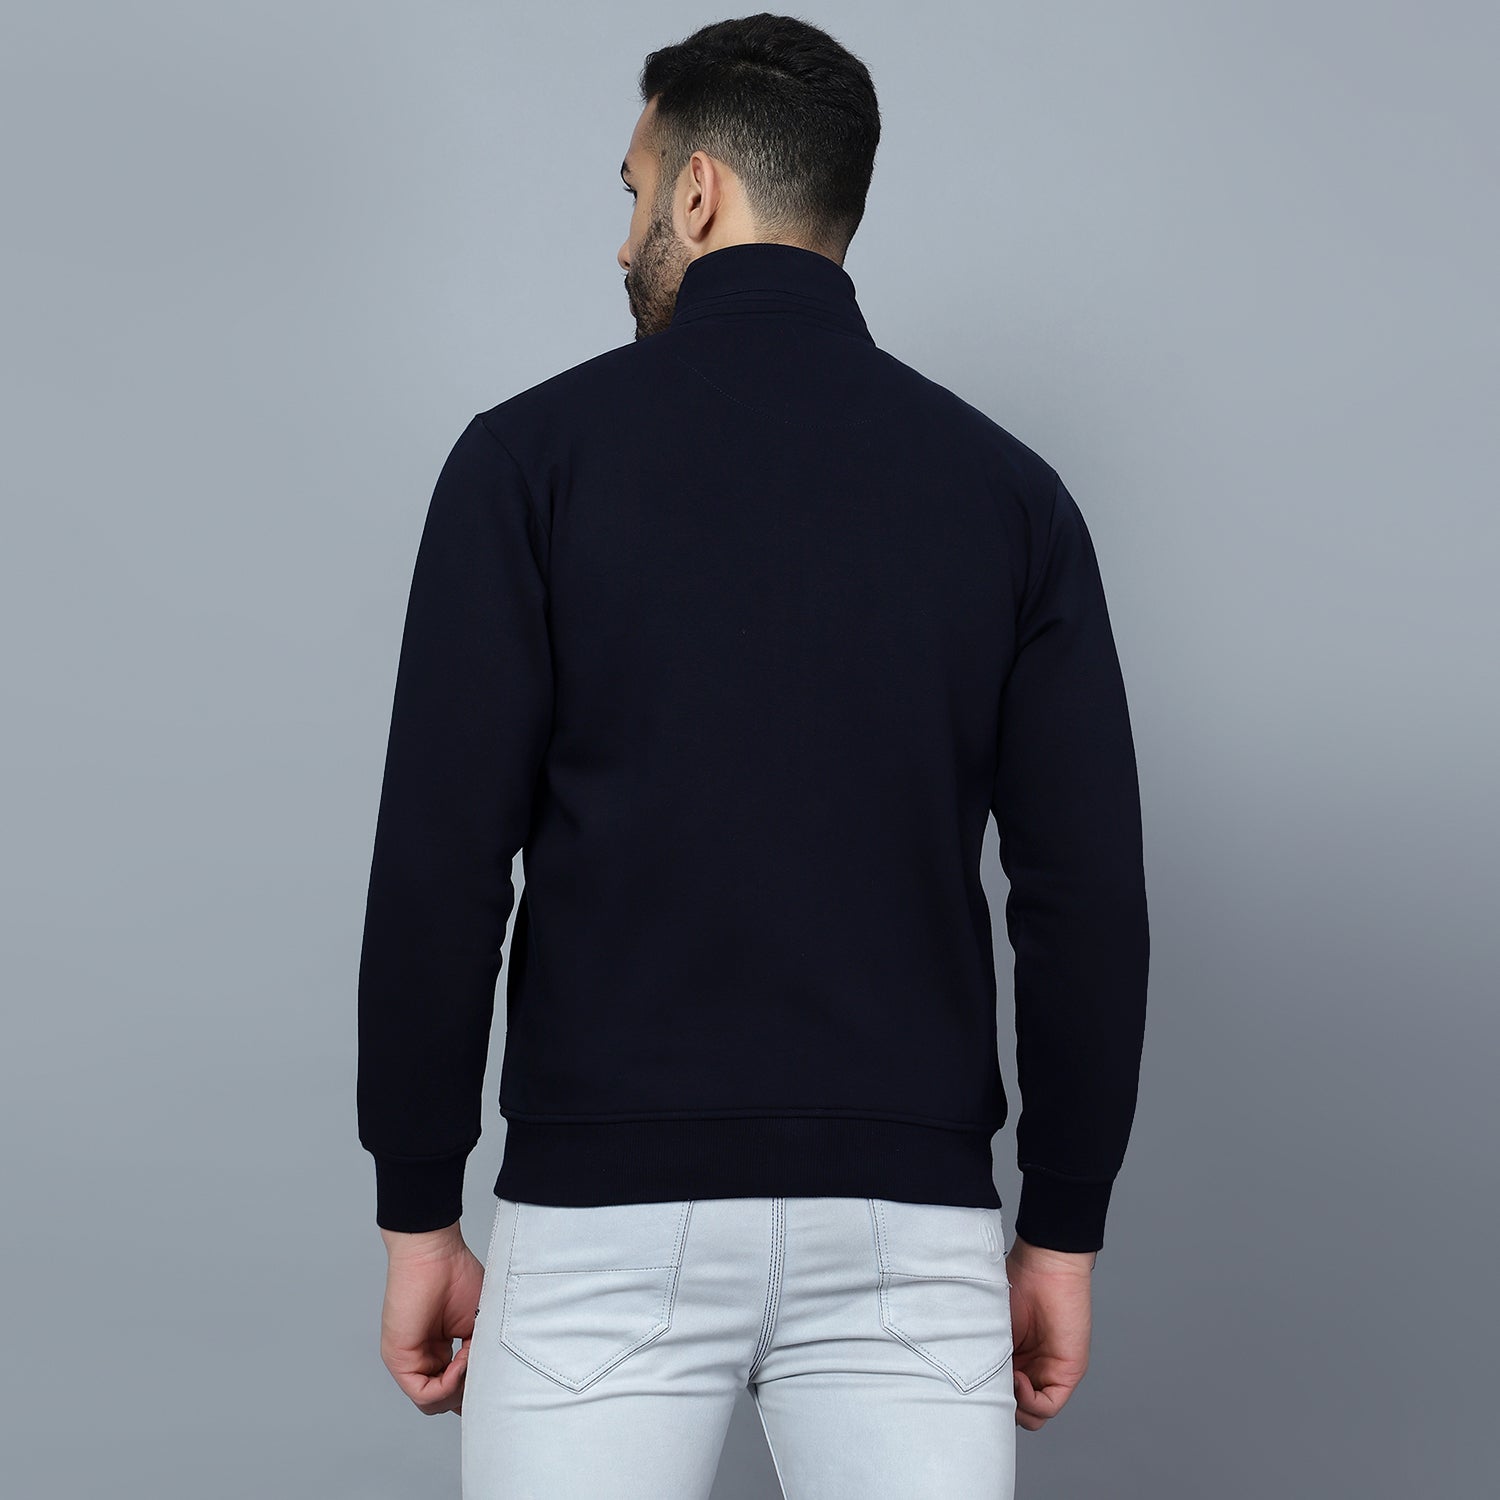 Mentoos Mock Collar Zipper Cotton Sweatshirt Navy Blue